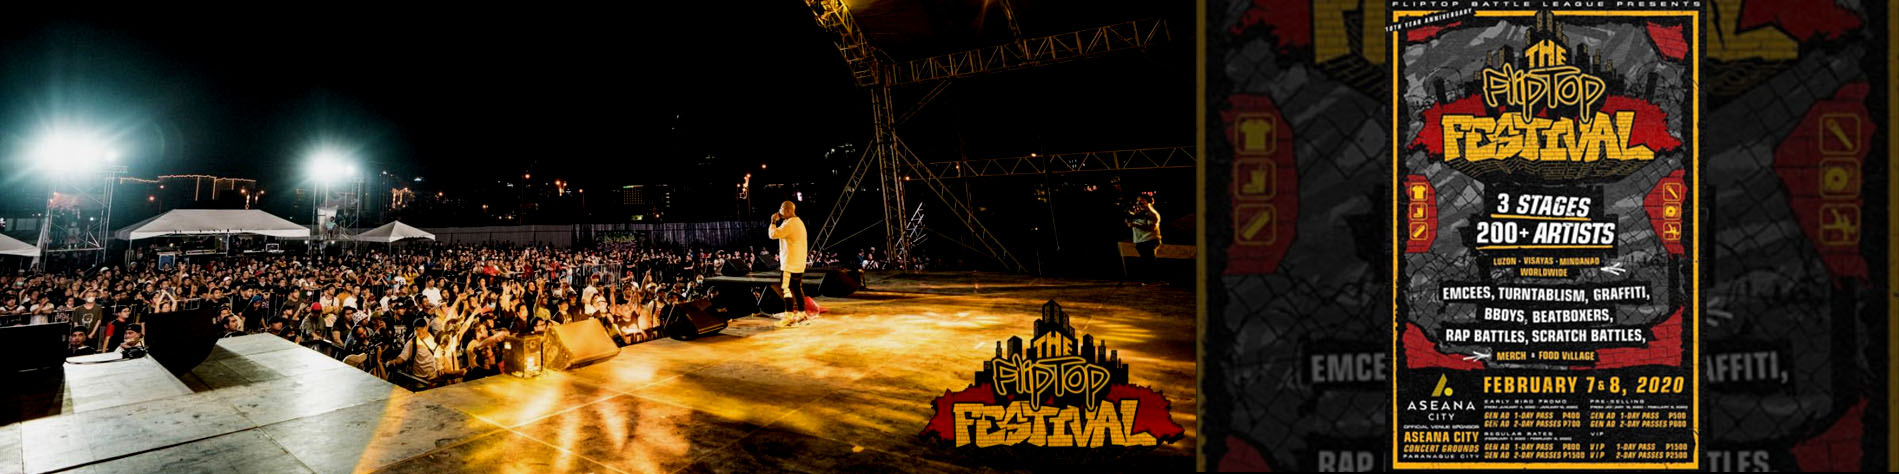 Fliptop Festival 2020